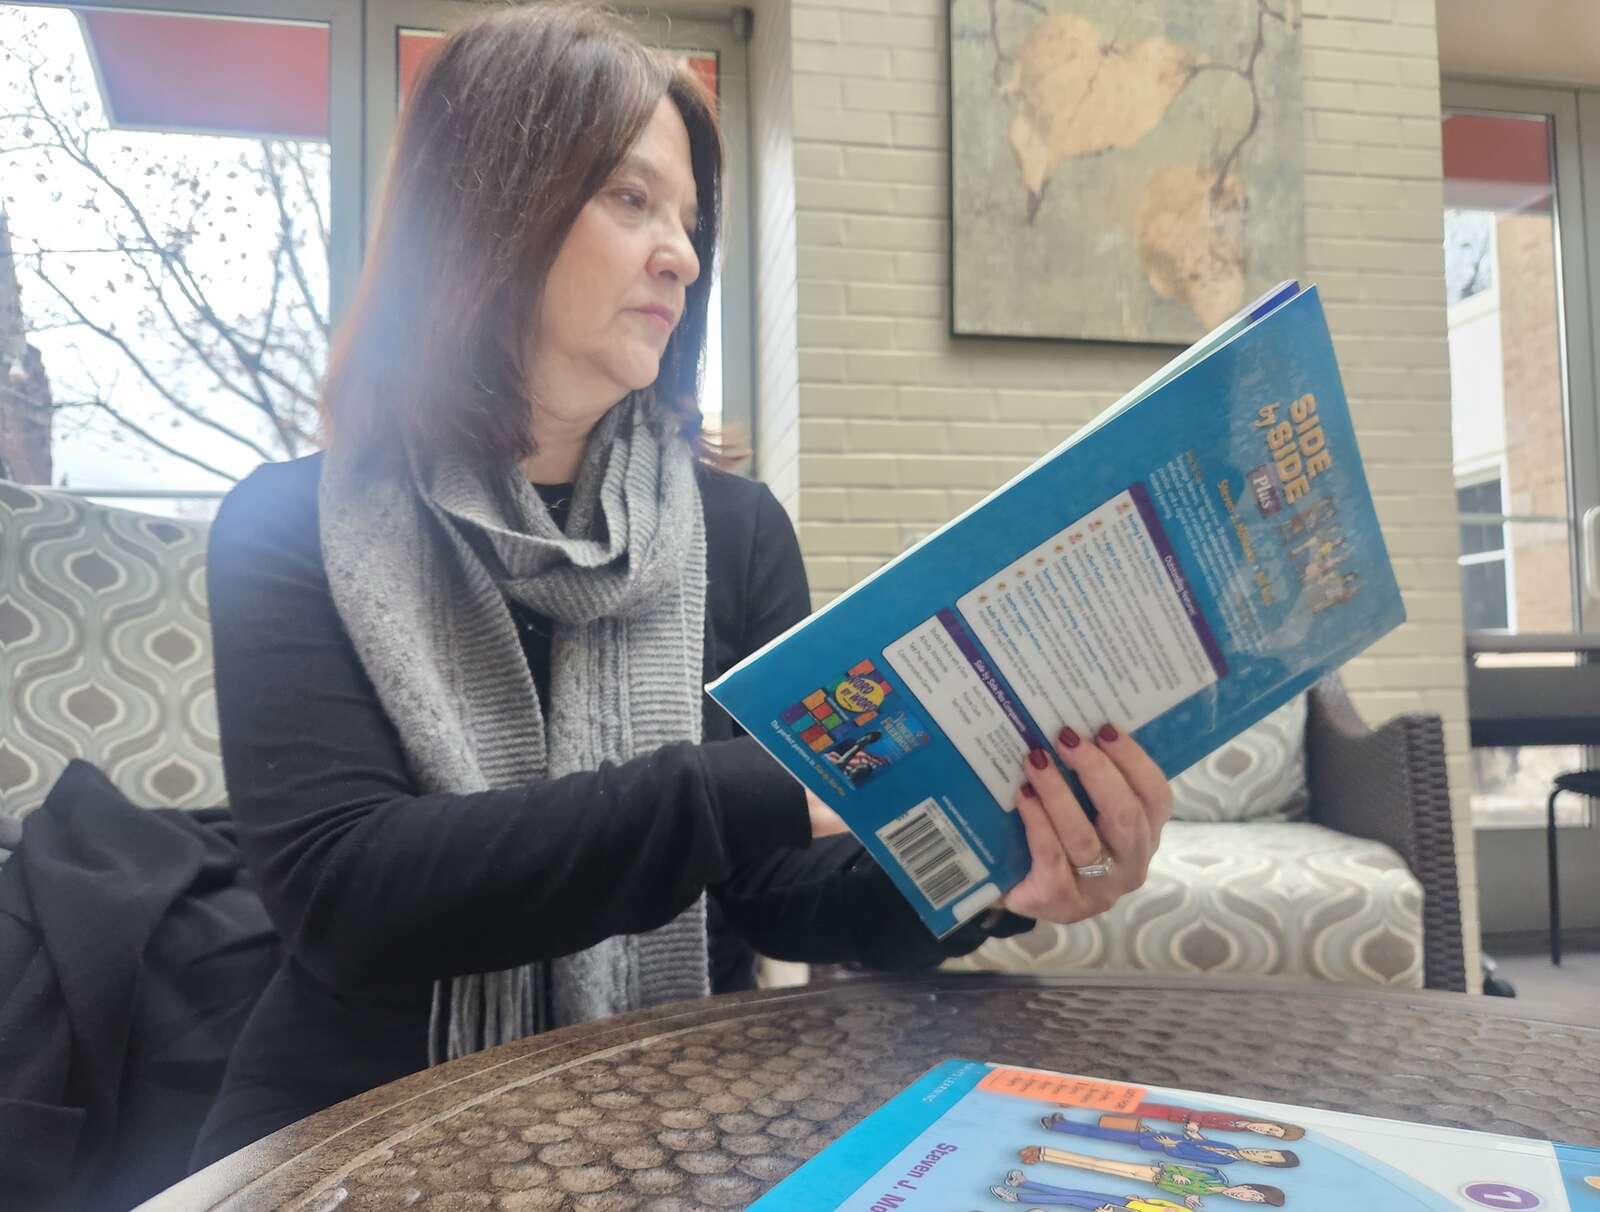 Arlene Gardopee looks through a workbook